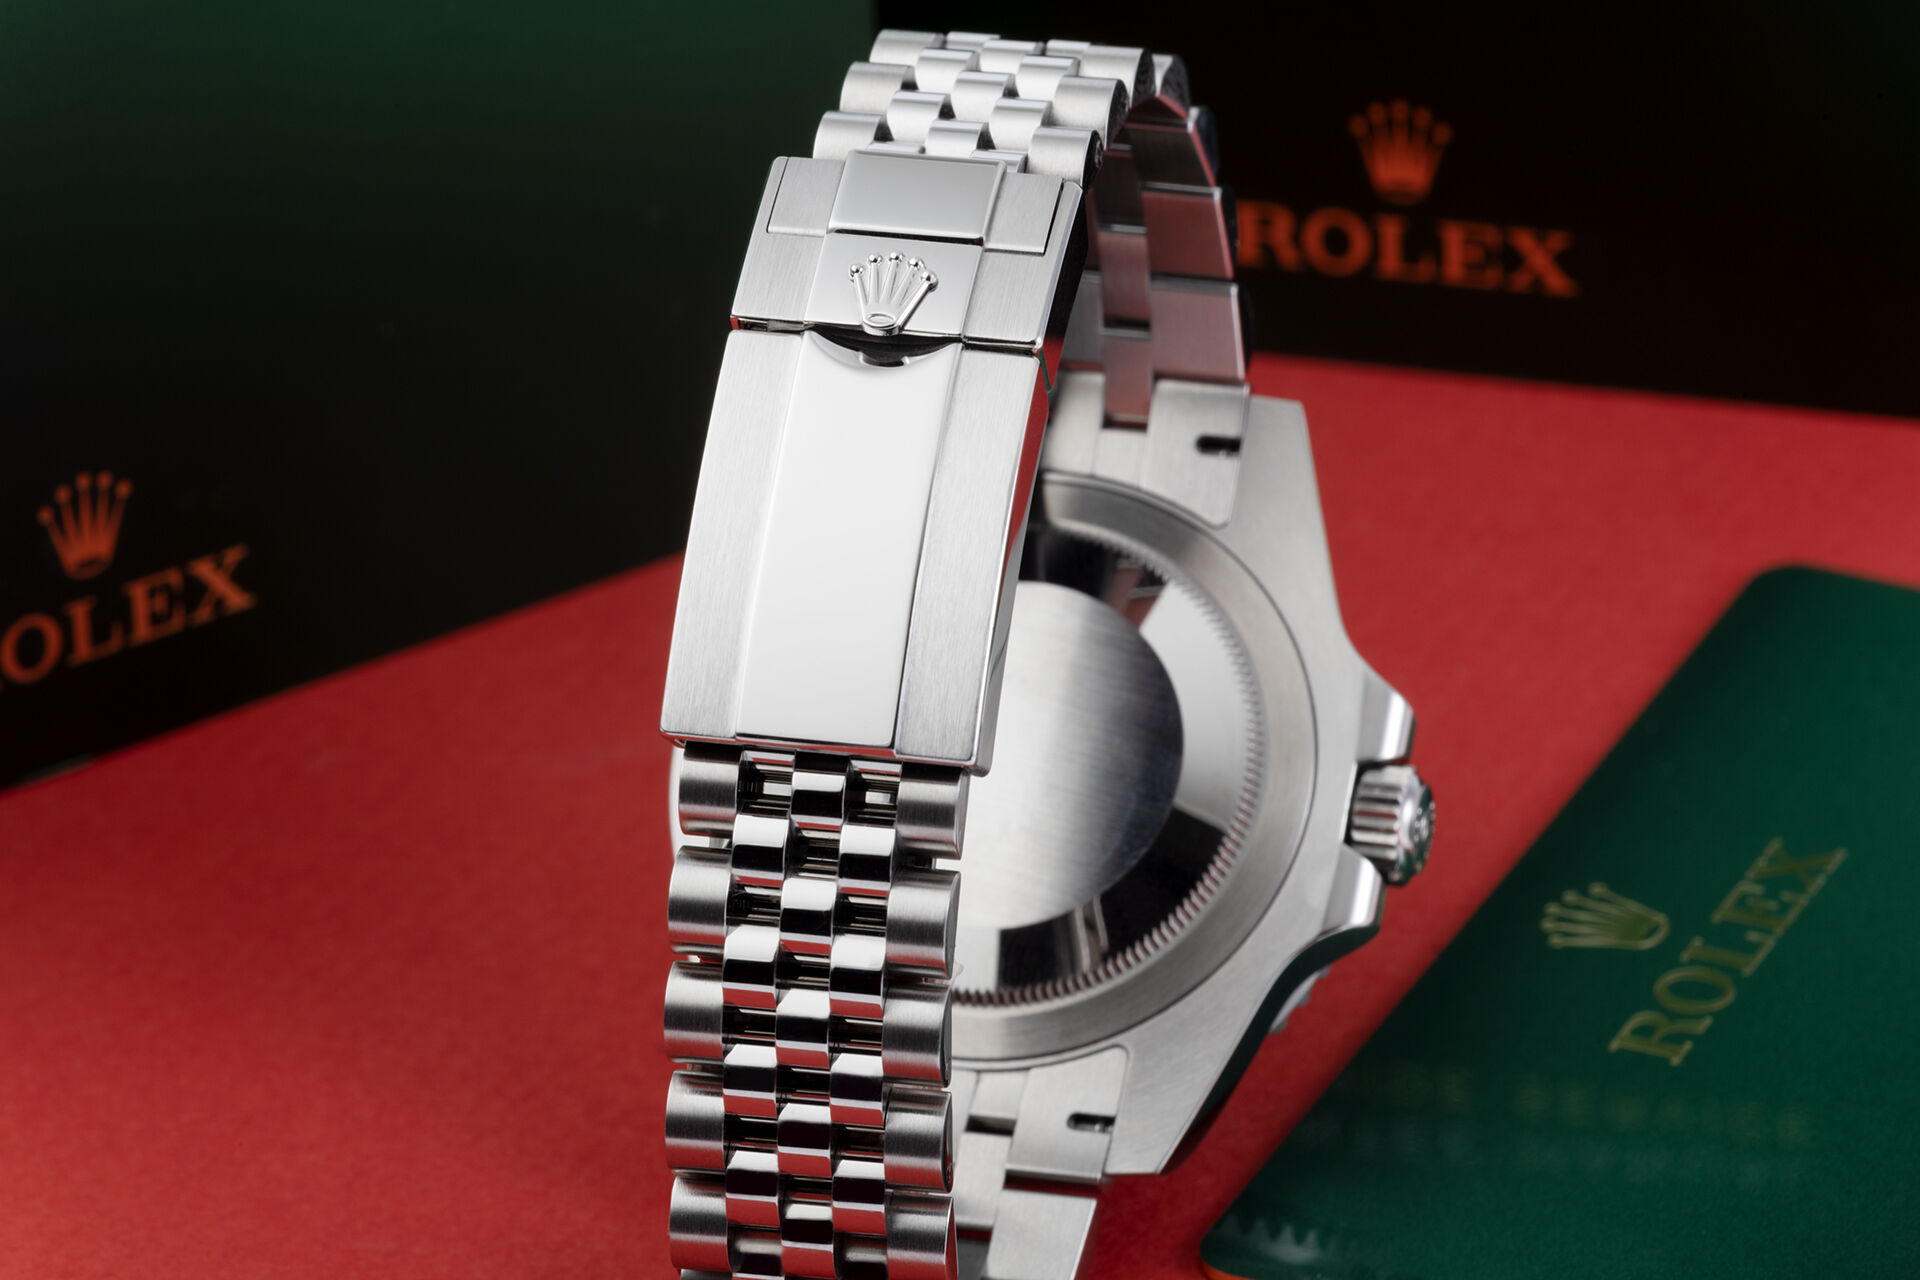 ref 126710BLRO | 5 Year Warranty - UK Purchased | Rolex GMT-Master II